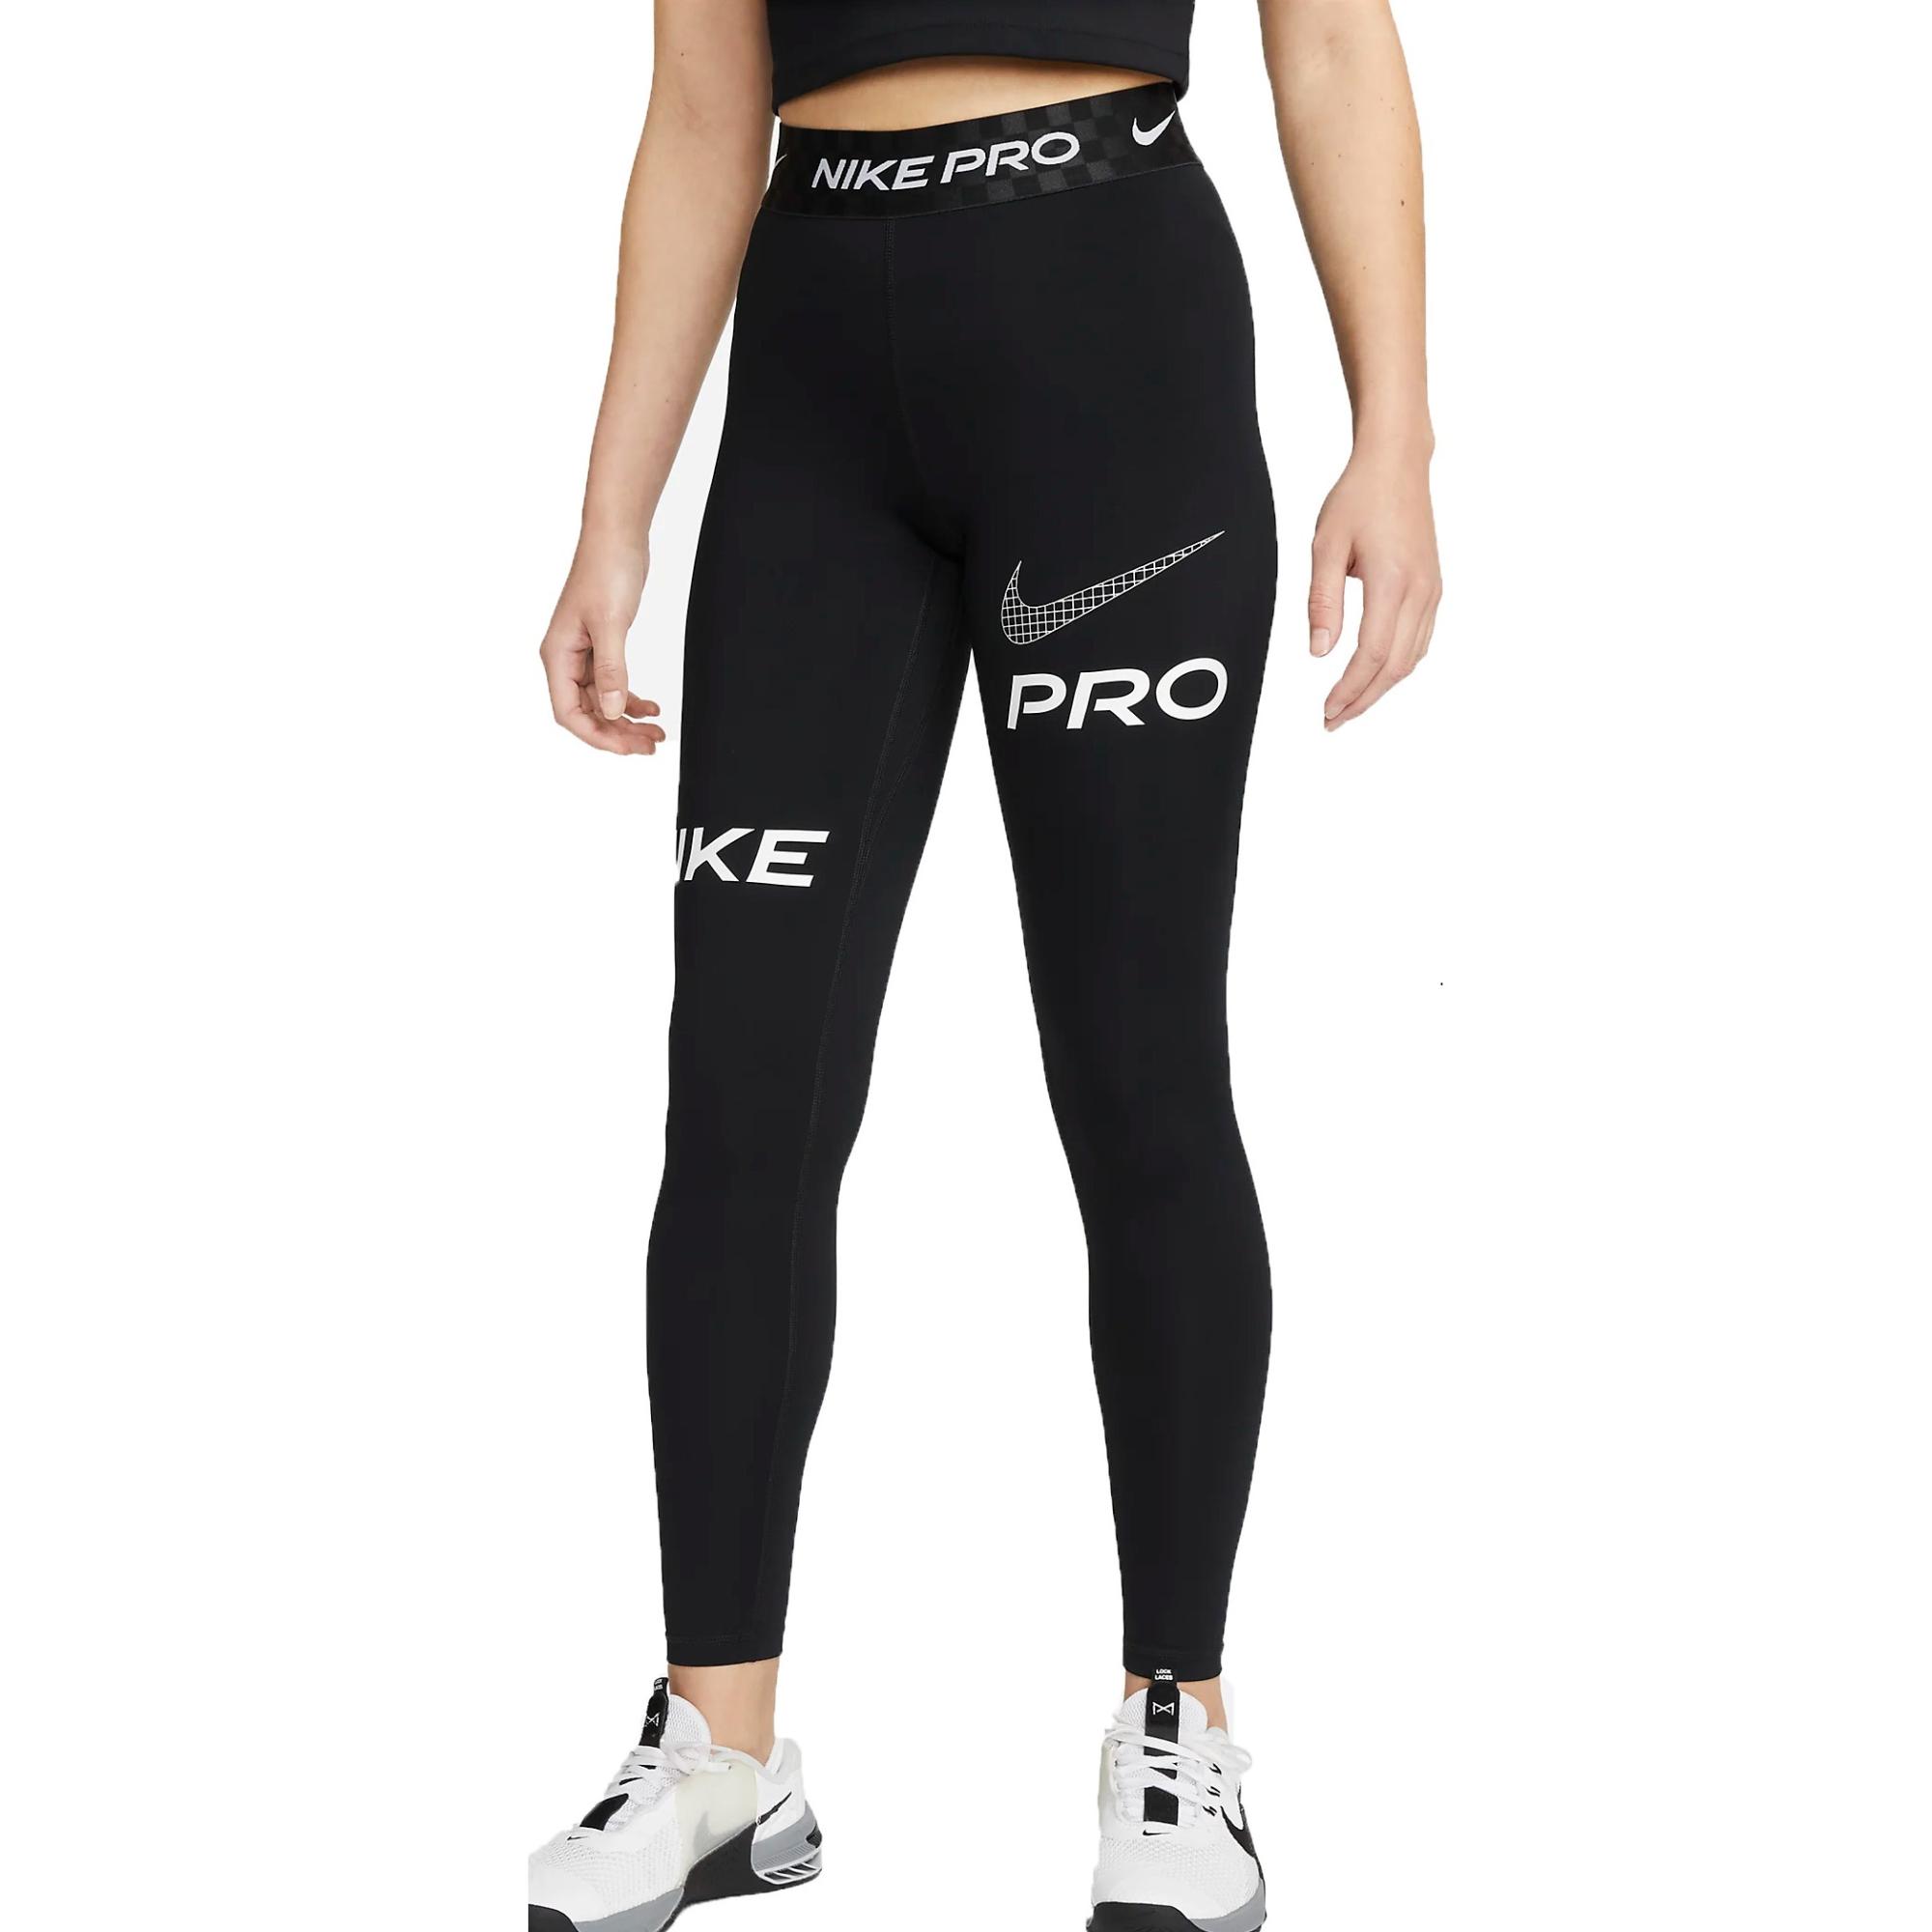 Catálogo ropa deportiva para mujer Nike Primavera Verano 